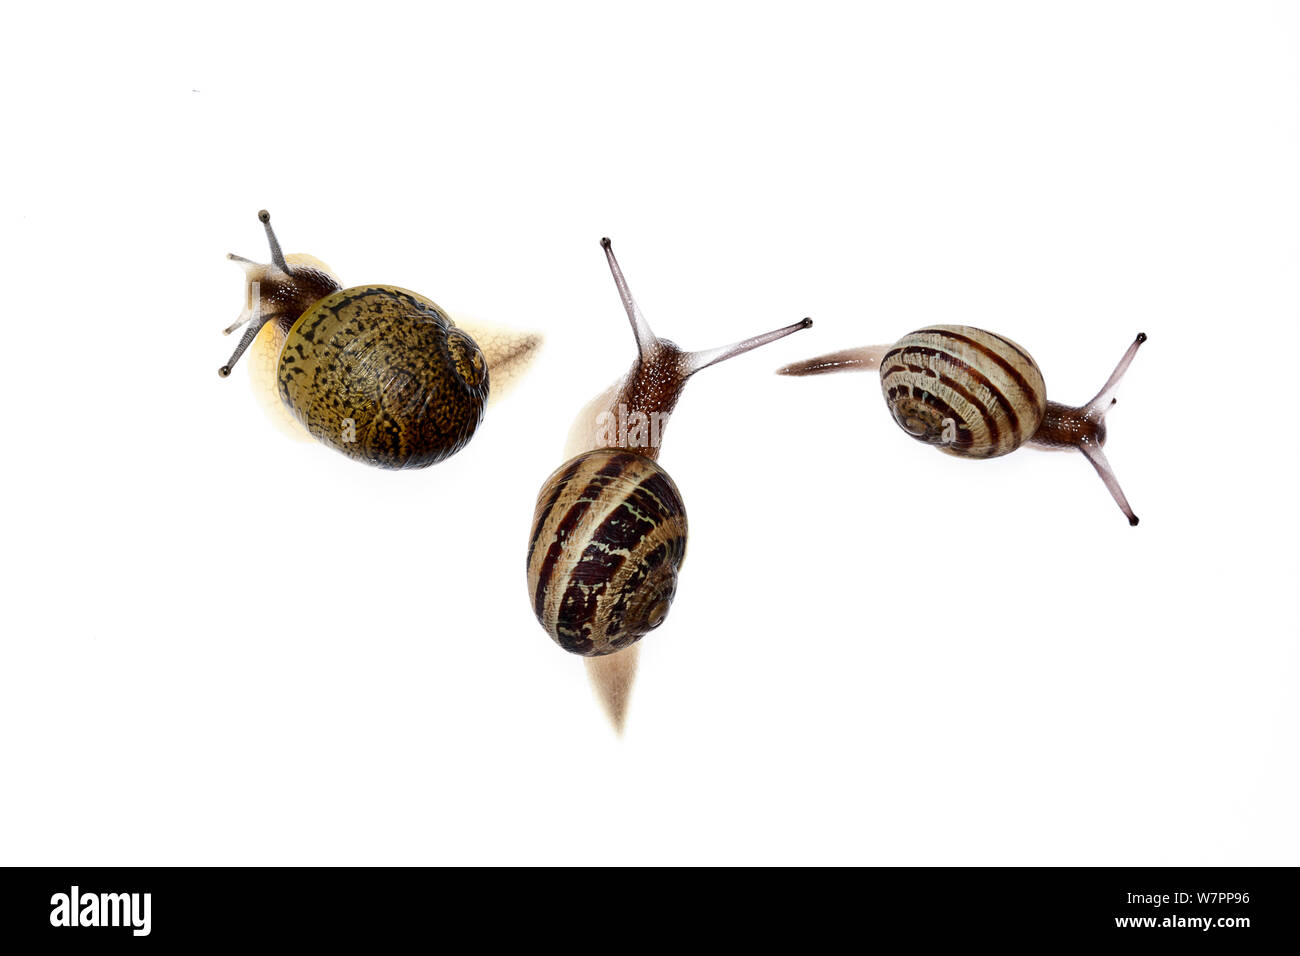 Three different species of garden snails, Common garden snail (Helix / Cantareus aspersus), White garden snail (Theba pisana) Heraklion, Crete, Greece meetyourneighbours.net project Stock Photo